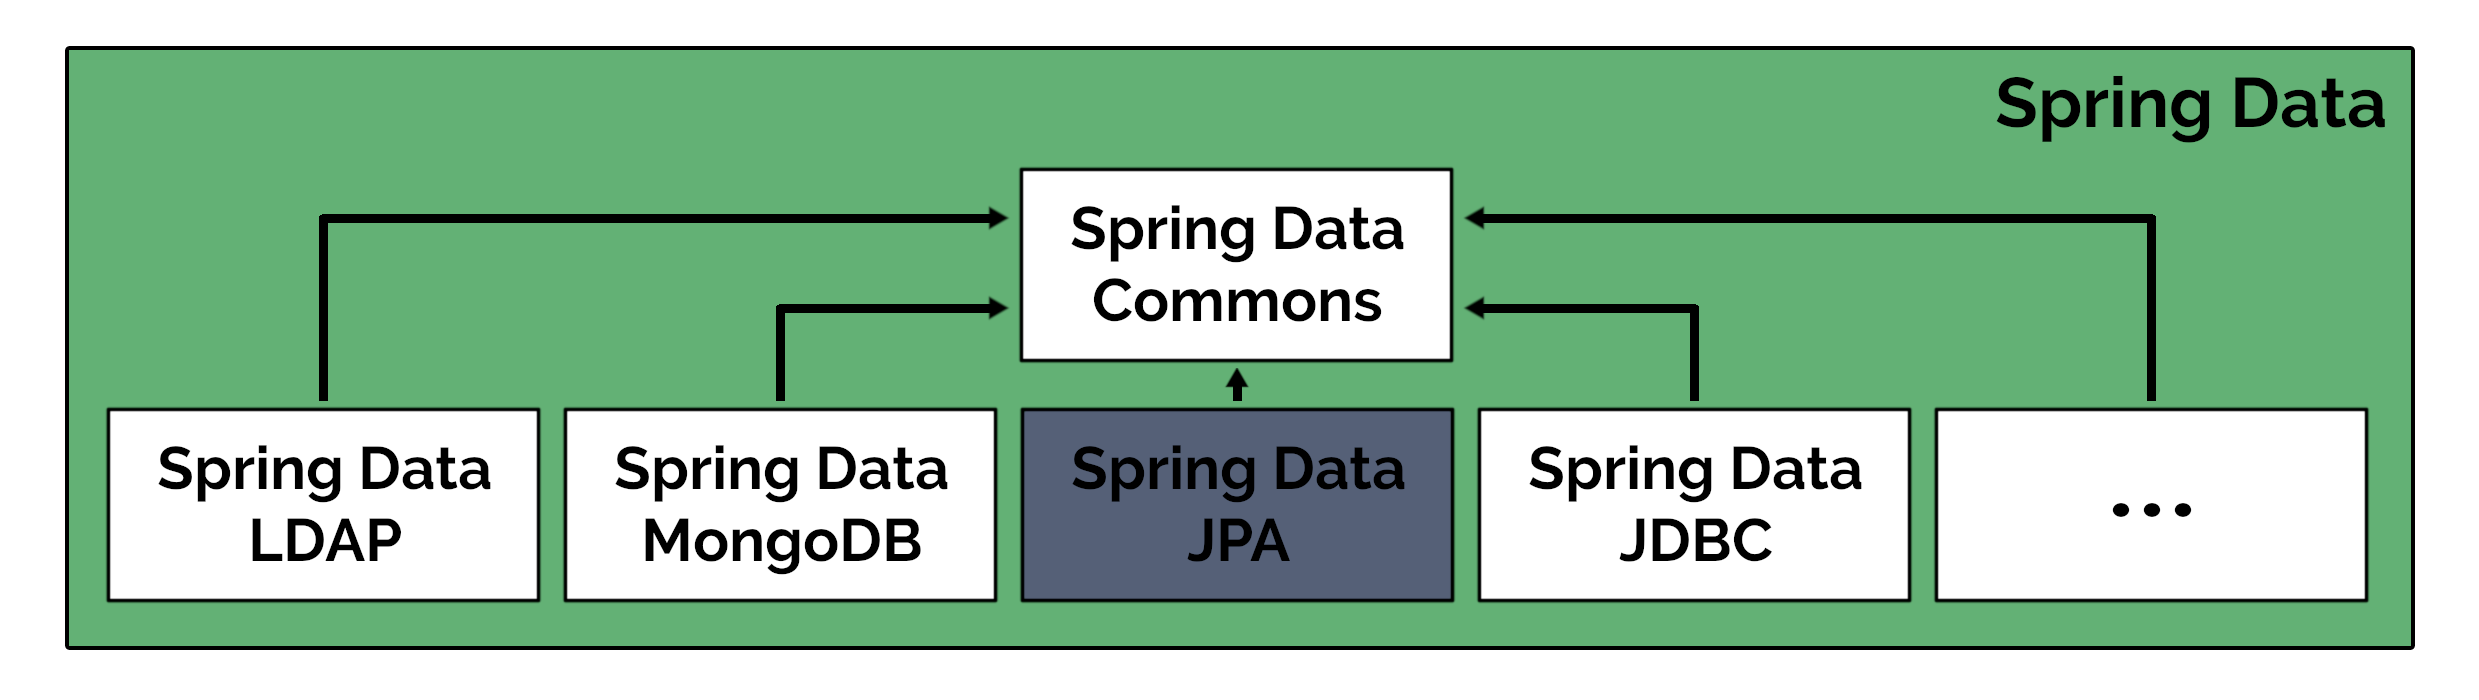 Spring Data JPA